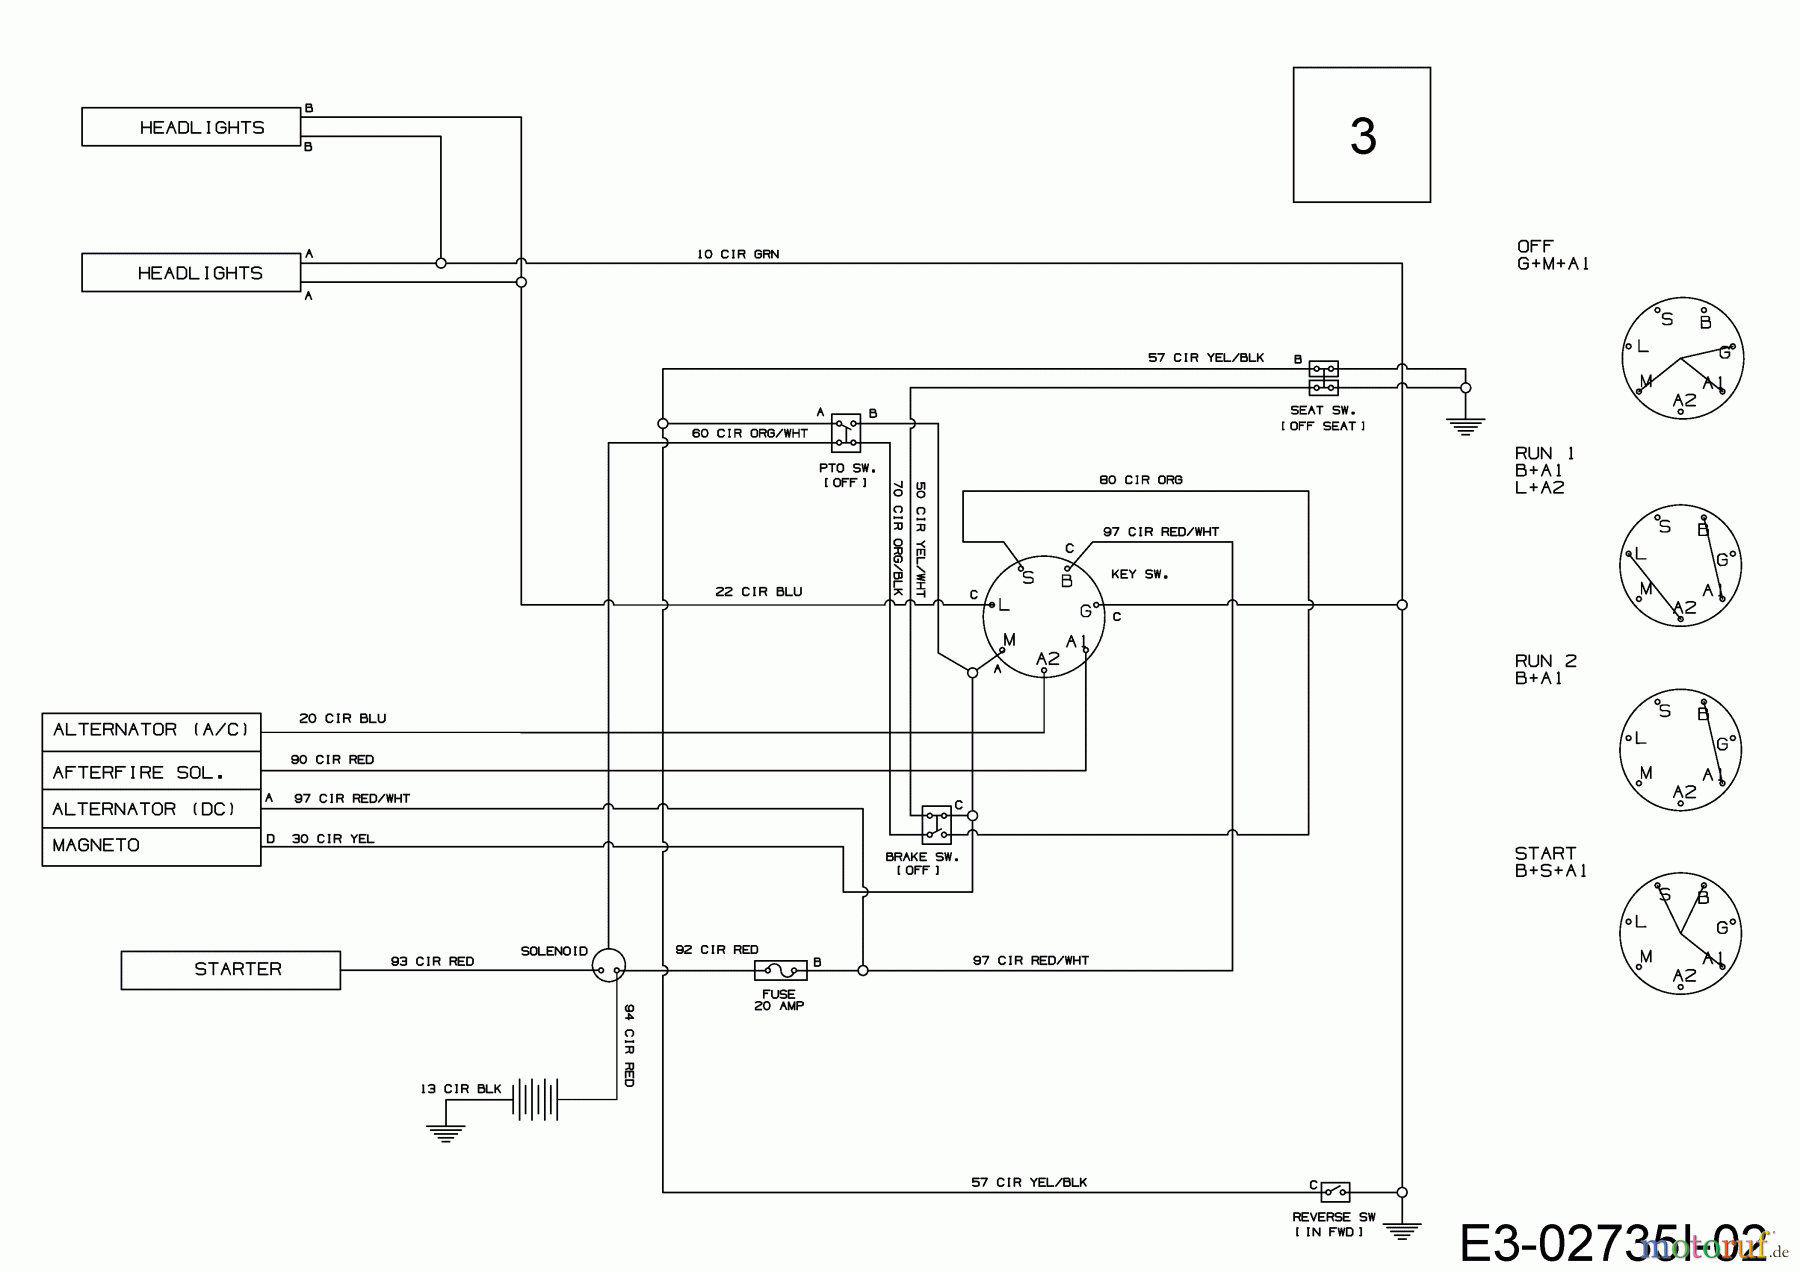  Bricolage Lawn tractors INV A145107 LB 13AM79SG648  (2019) Wiring diagram